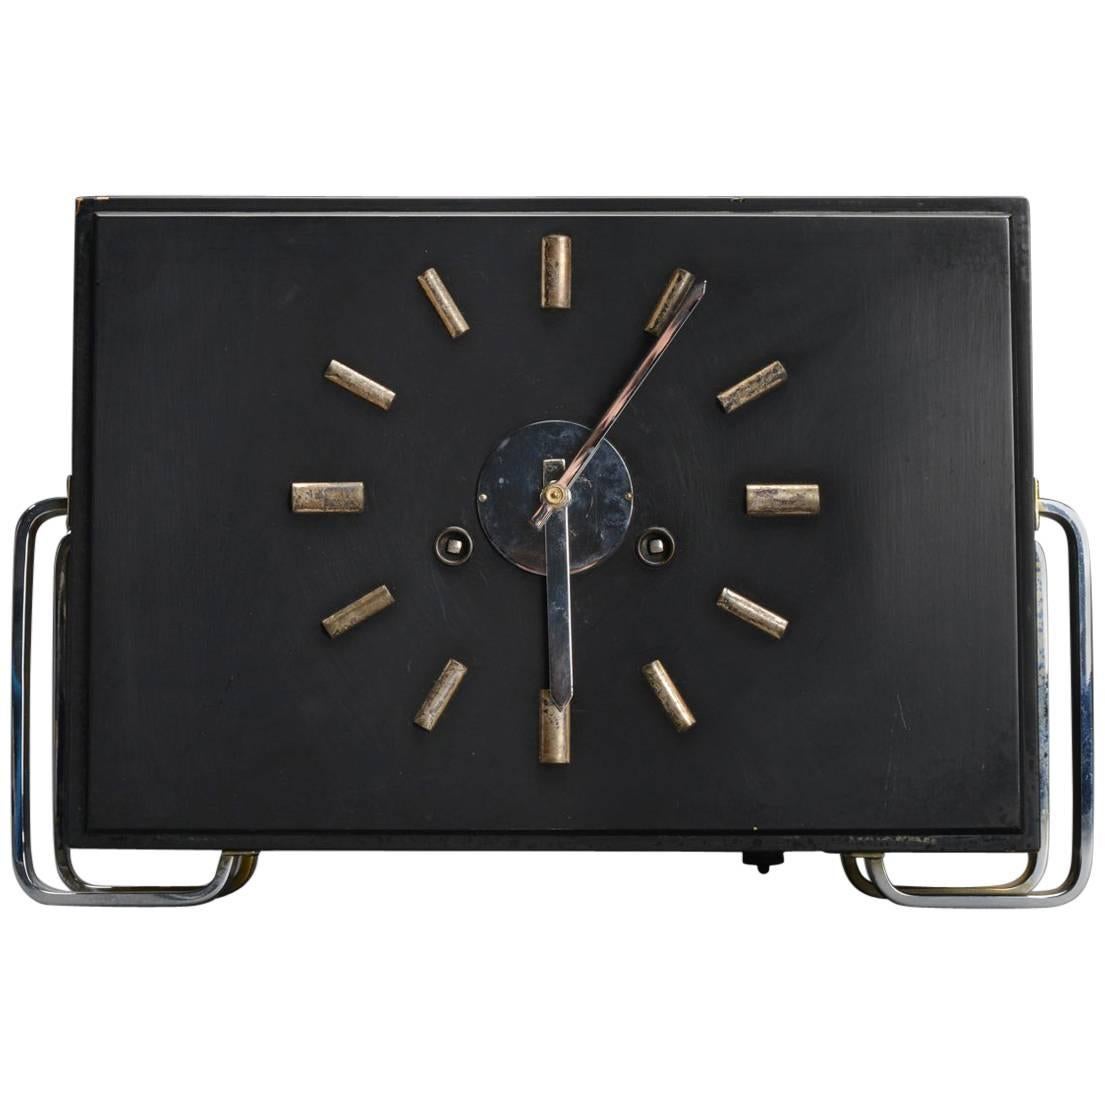 Beautiful Bauhaus Mantel Clock by Junghans